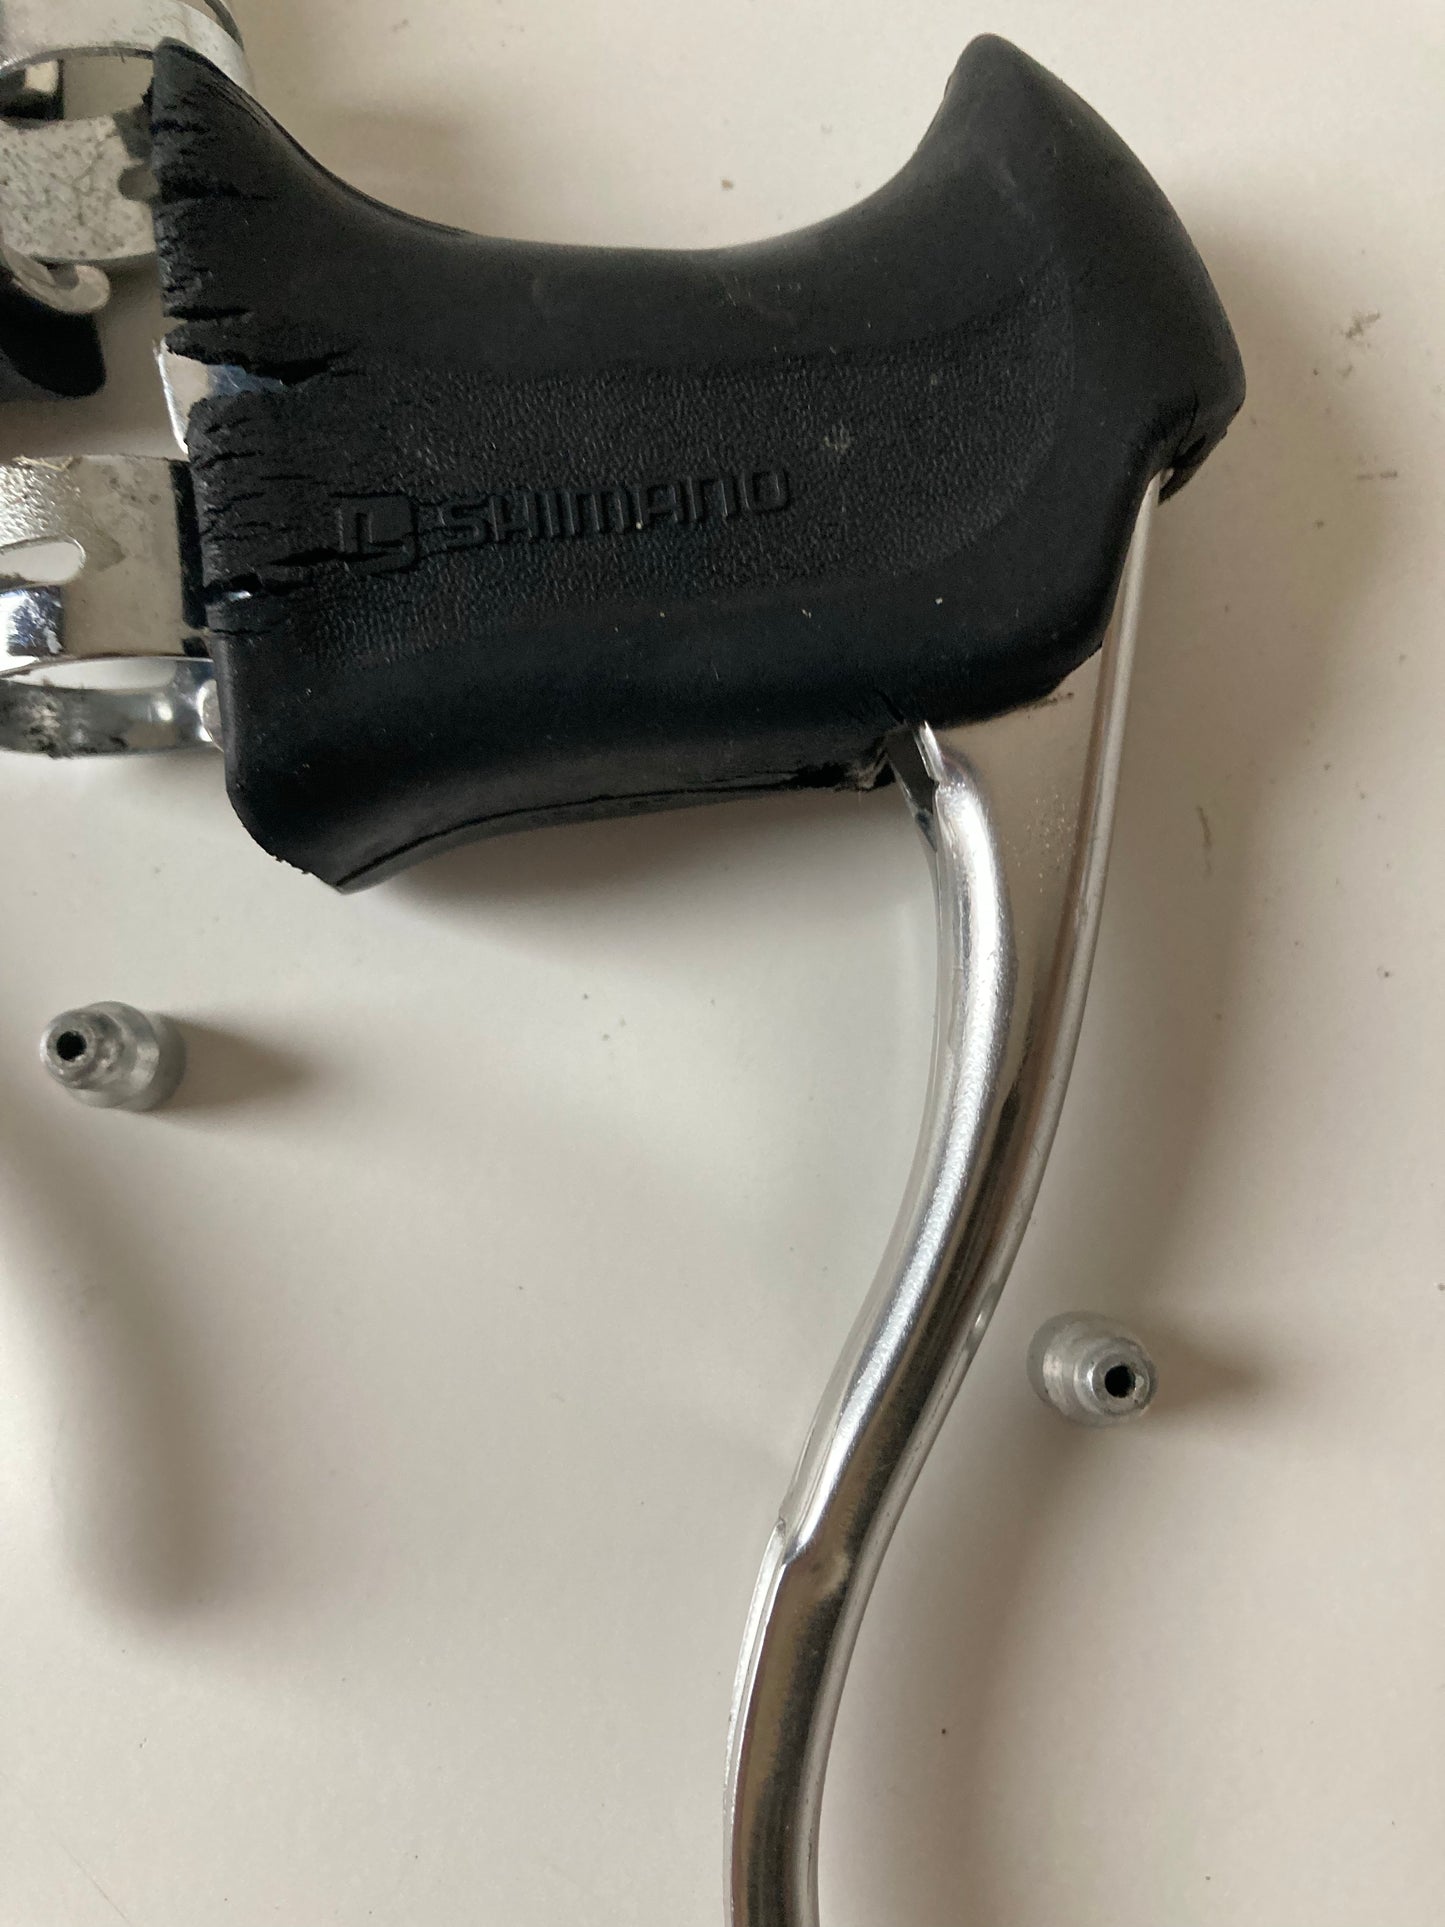 Shimano AX brake levers + original hoods